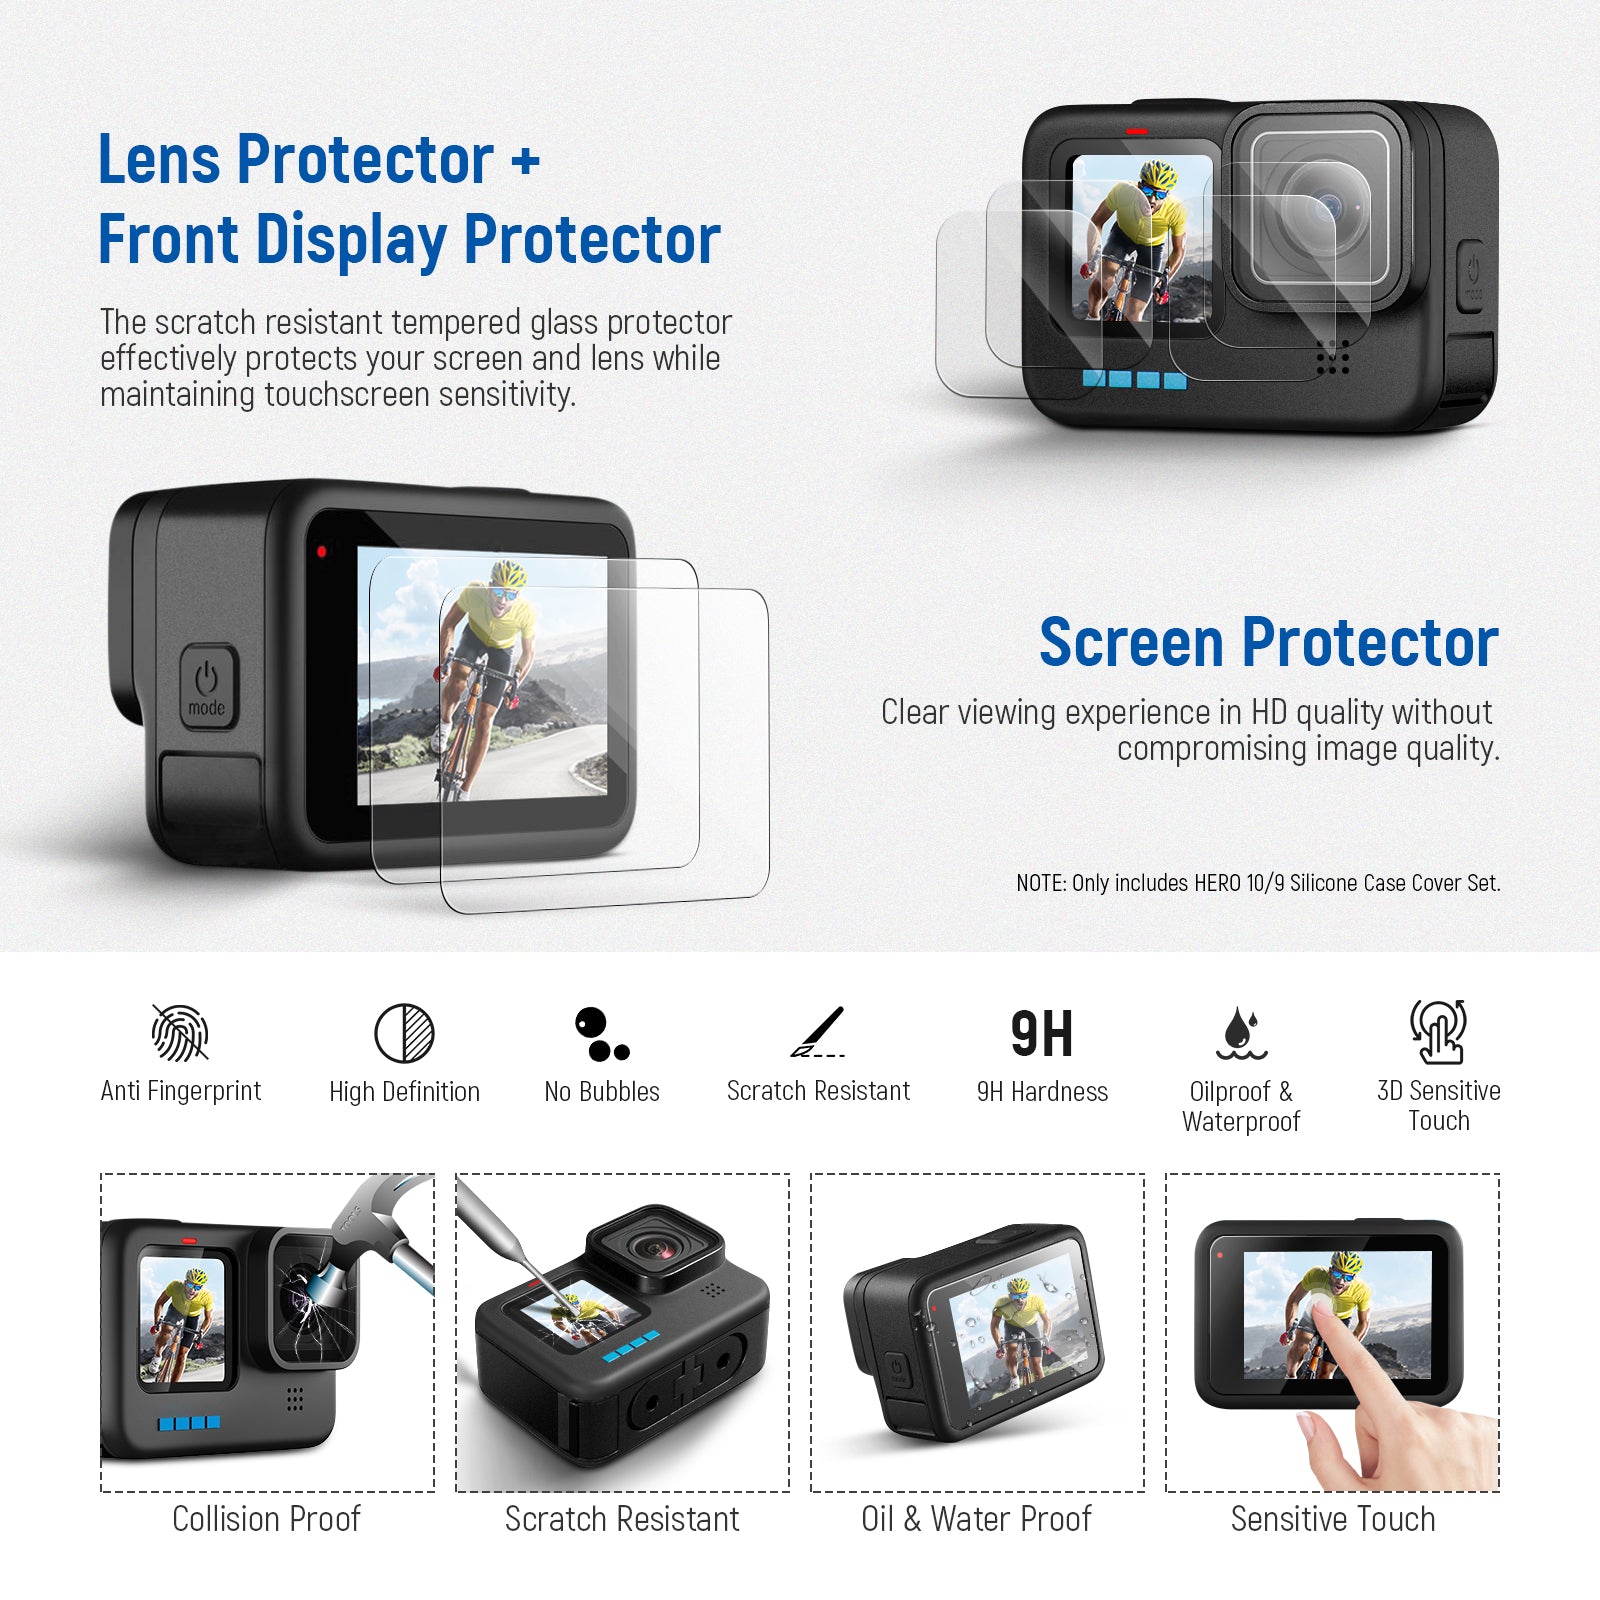 FitStill Silicone Sleeve Case for Go Pro Hero12 /Hero11 /Hero 10 /Hero 9  Black, Battery Side Cover & Lens Caps & Screen Protectors & Lanyard for Go